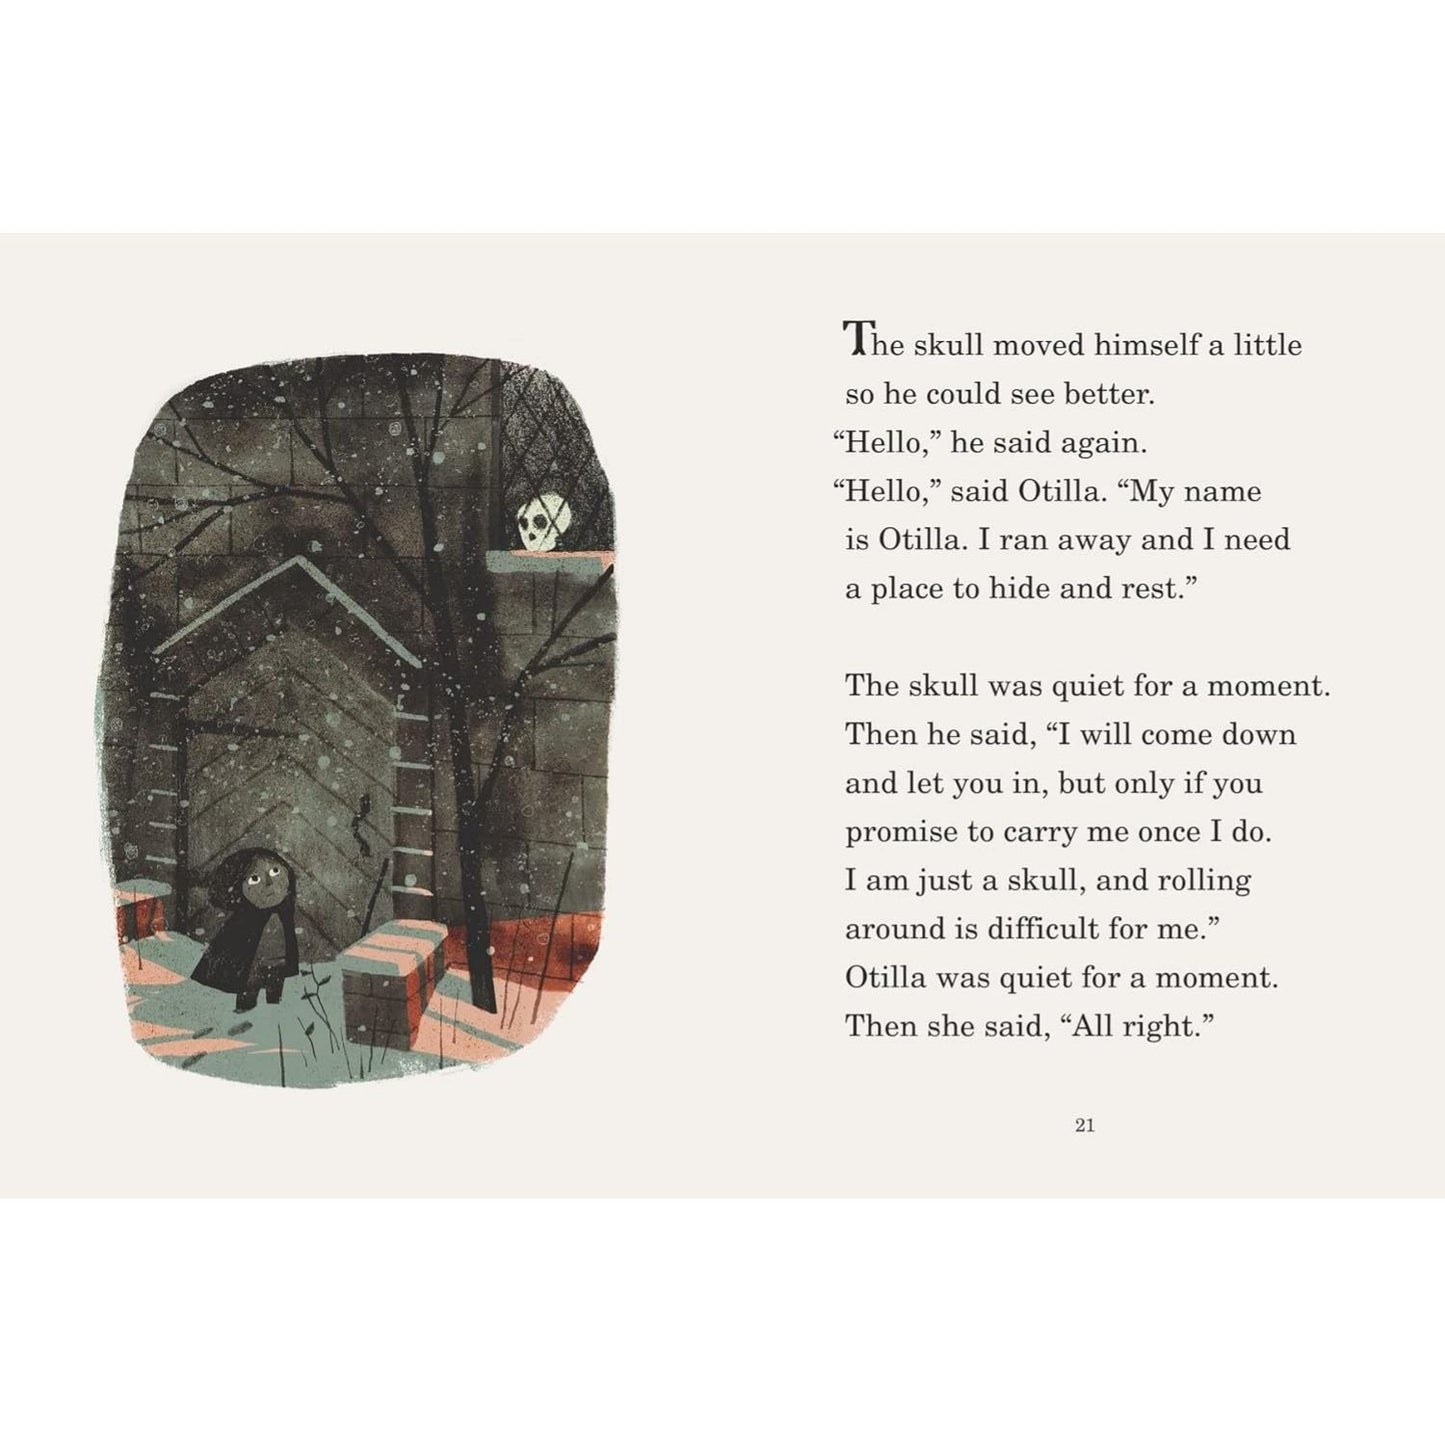 The Skull: A Tyrolean Folktale | Hardback | Children’s Book